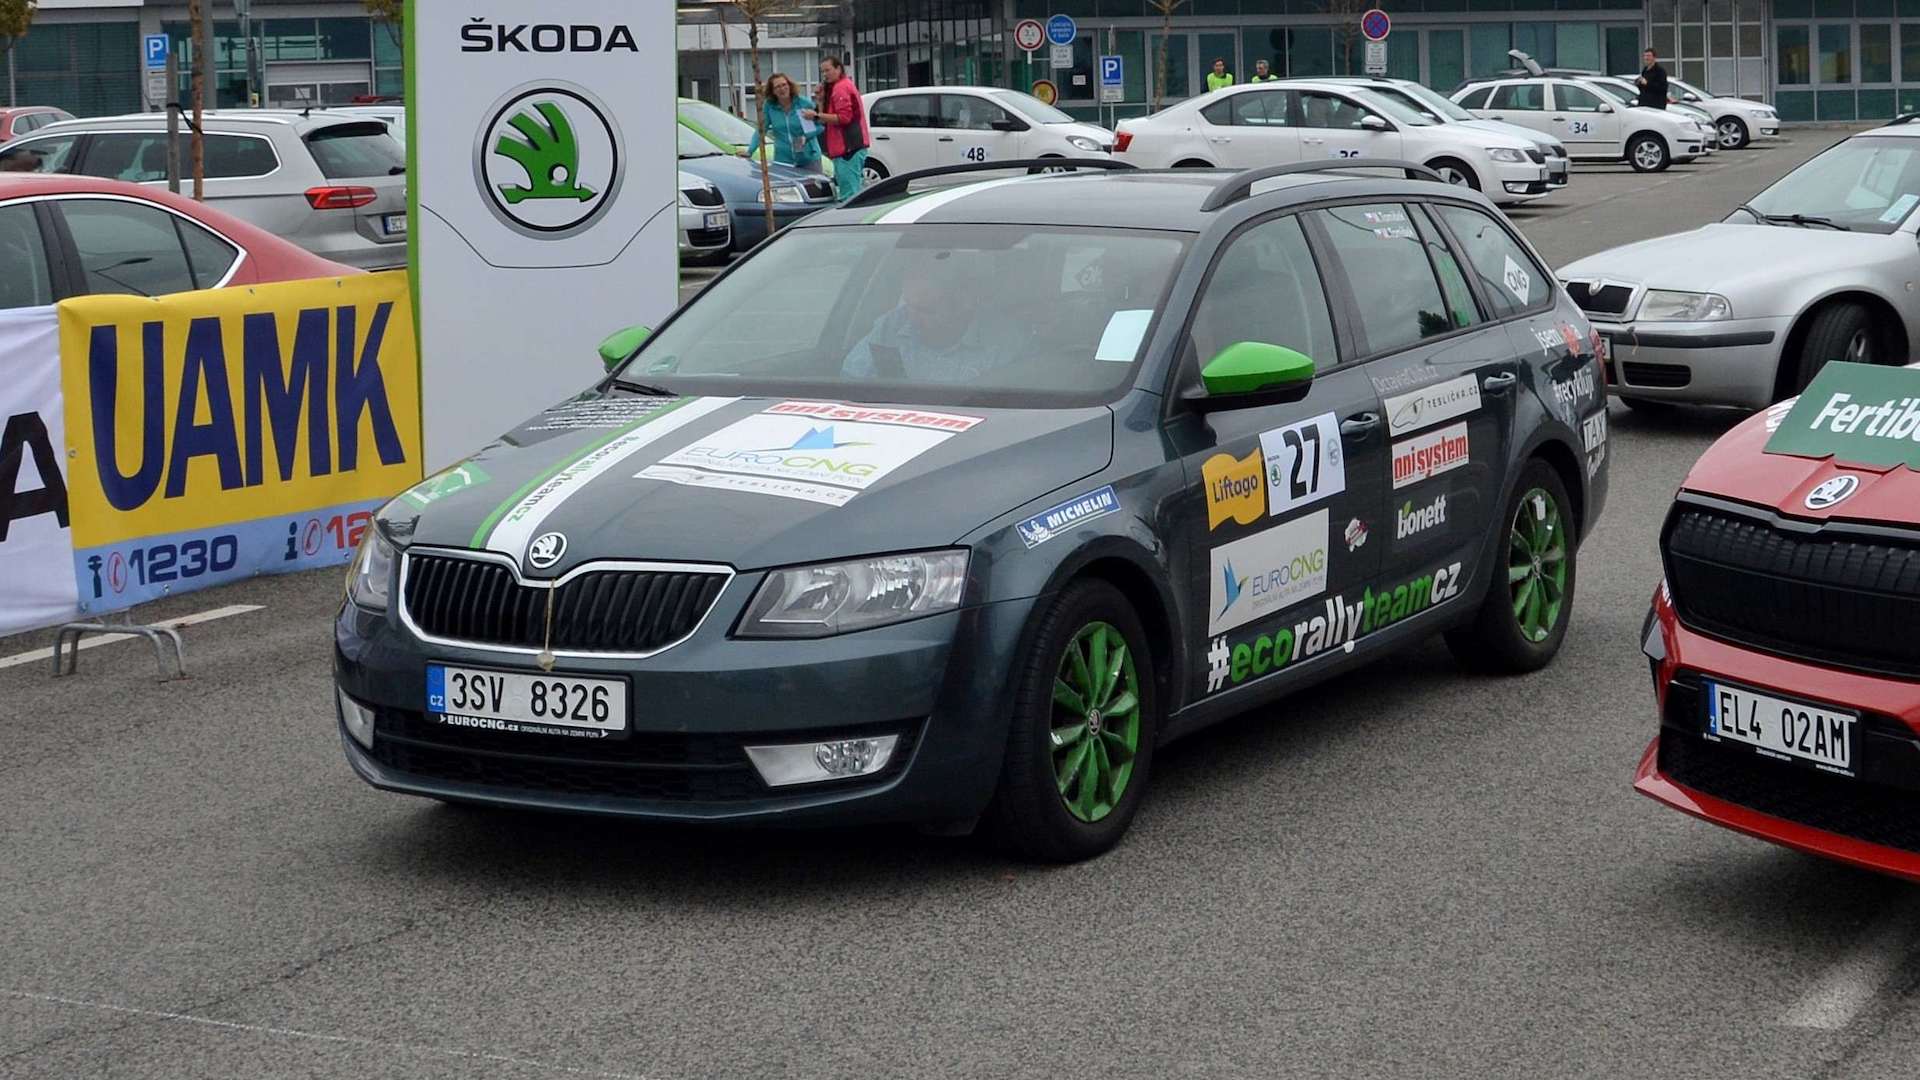 Škoda Octavia Combi G-TEC #EcoRallyTeamCZ